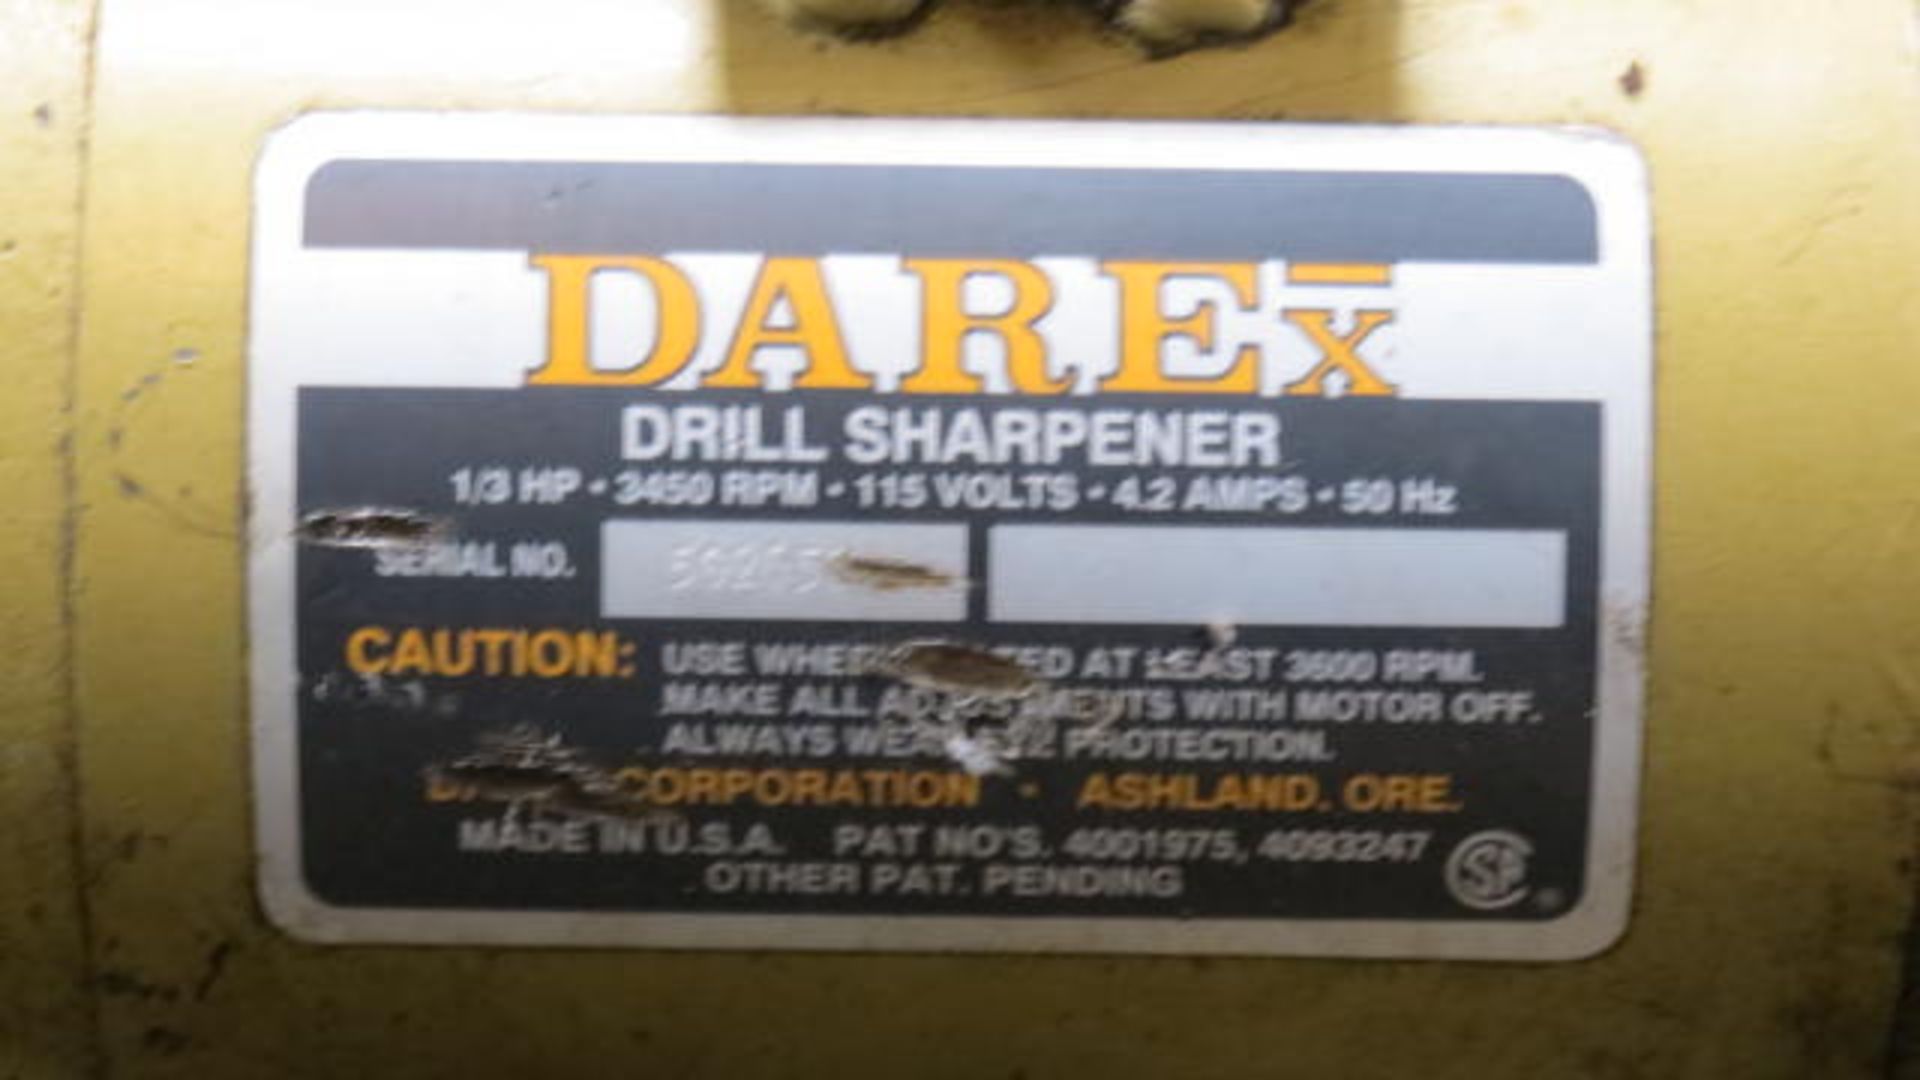 Dare Drill Sharpener/6'' Grinder. 1/3 HP, 4.2 AMPS, 115 VOLTS, 50HZ - Image 2 of 2